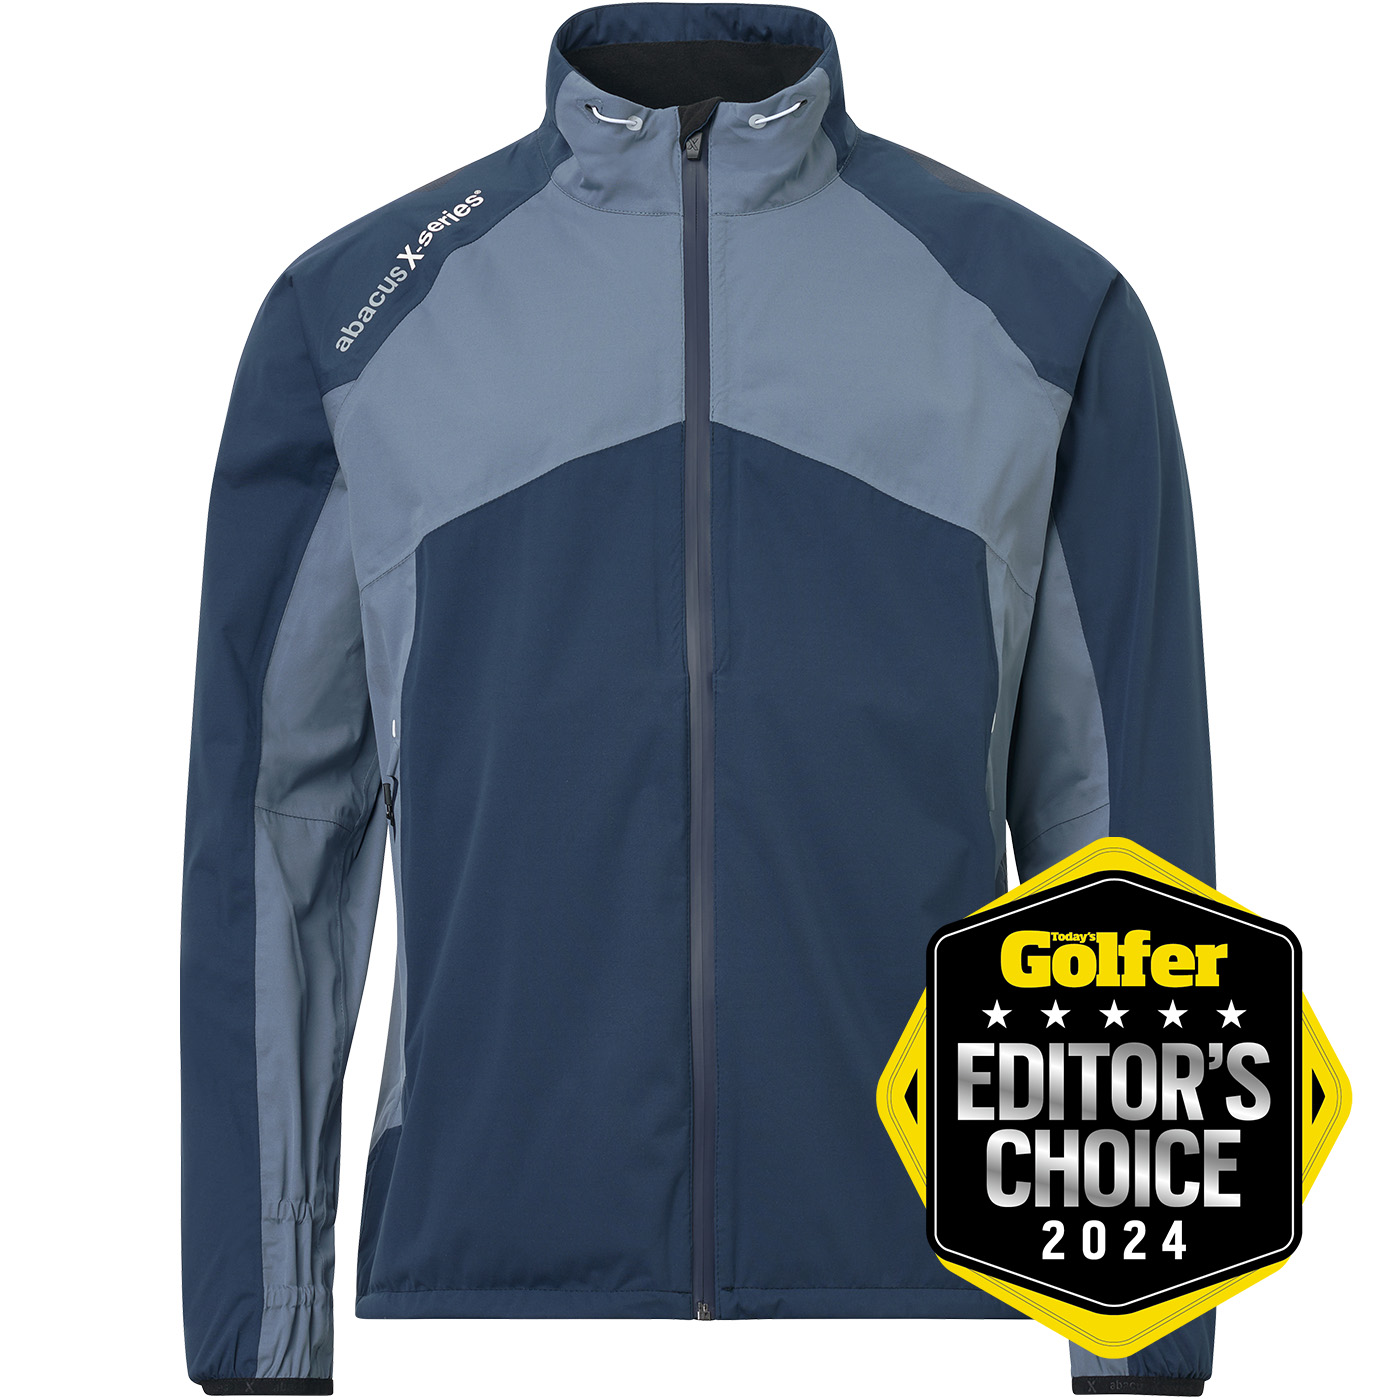 Mens Pitch 37.5 technology rainjacket - dusty blue Jackets - MEN | Golf ...